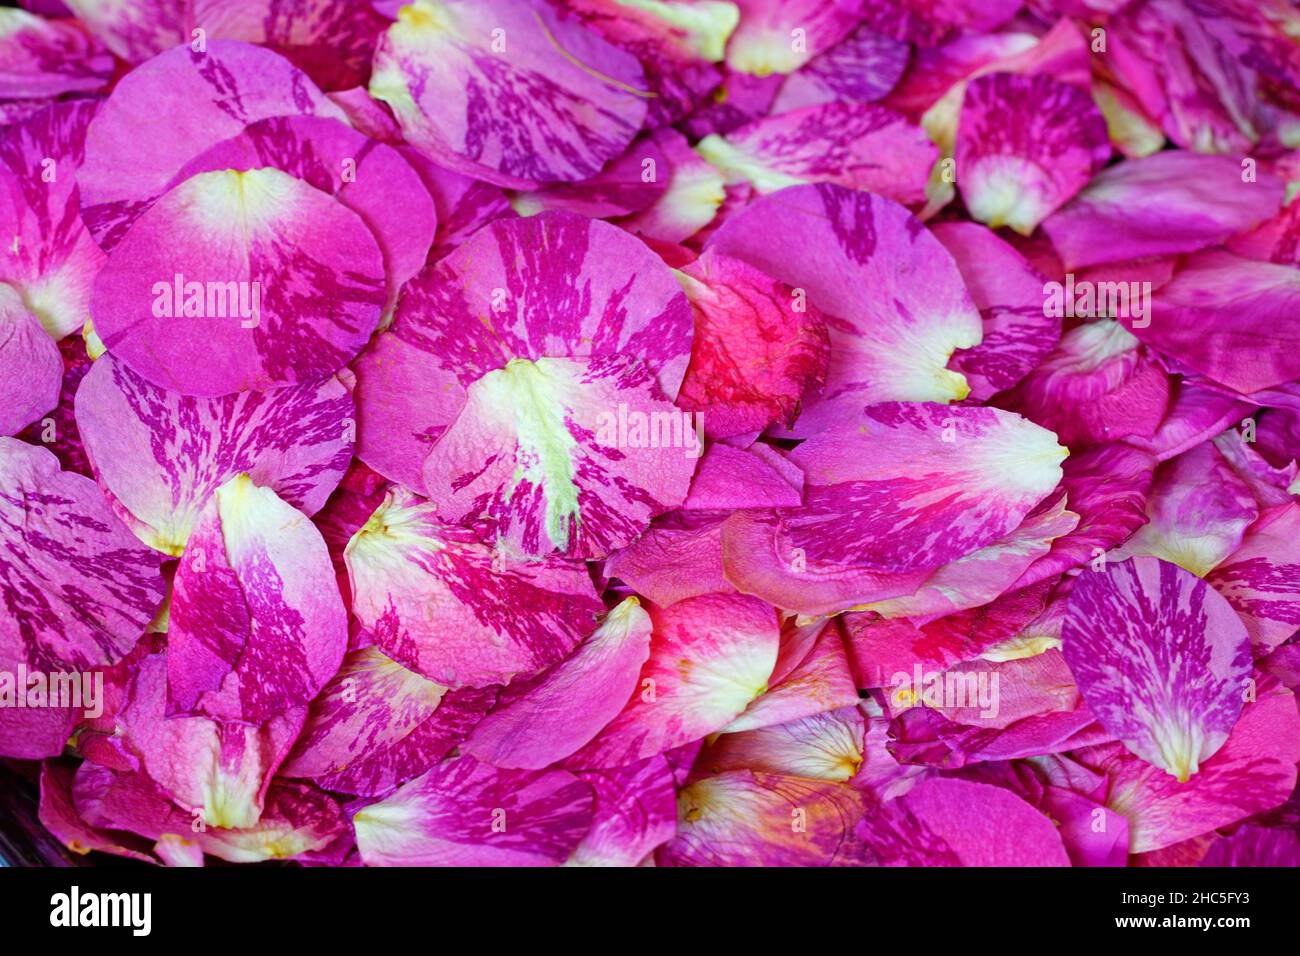 Rose Pressed Edible Flowers (Petals)